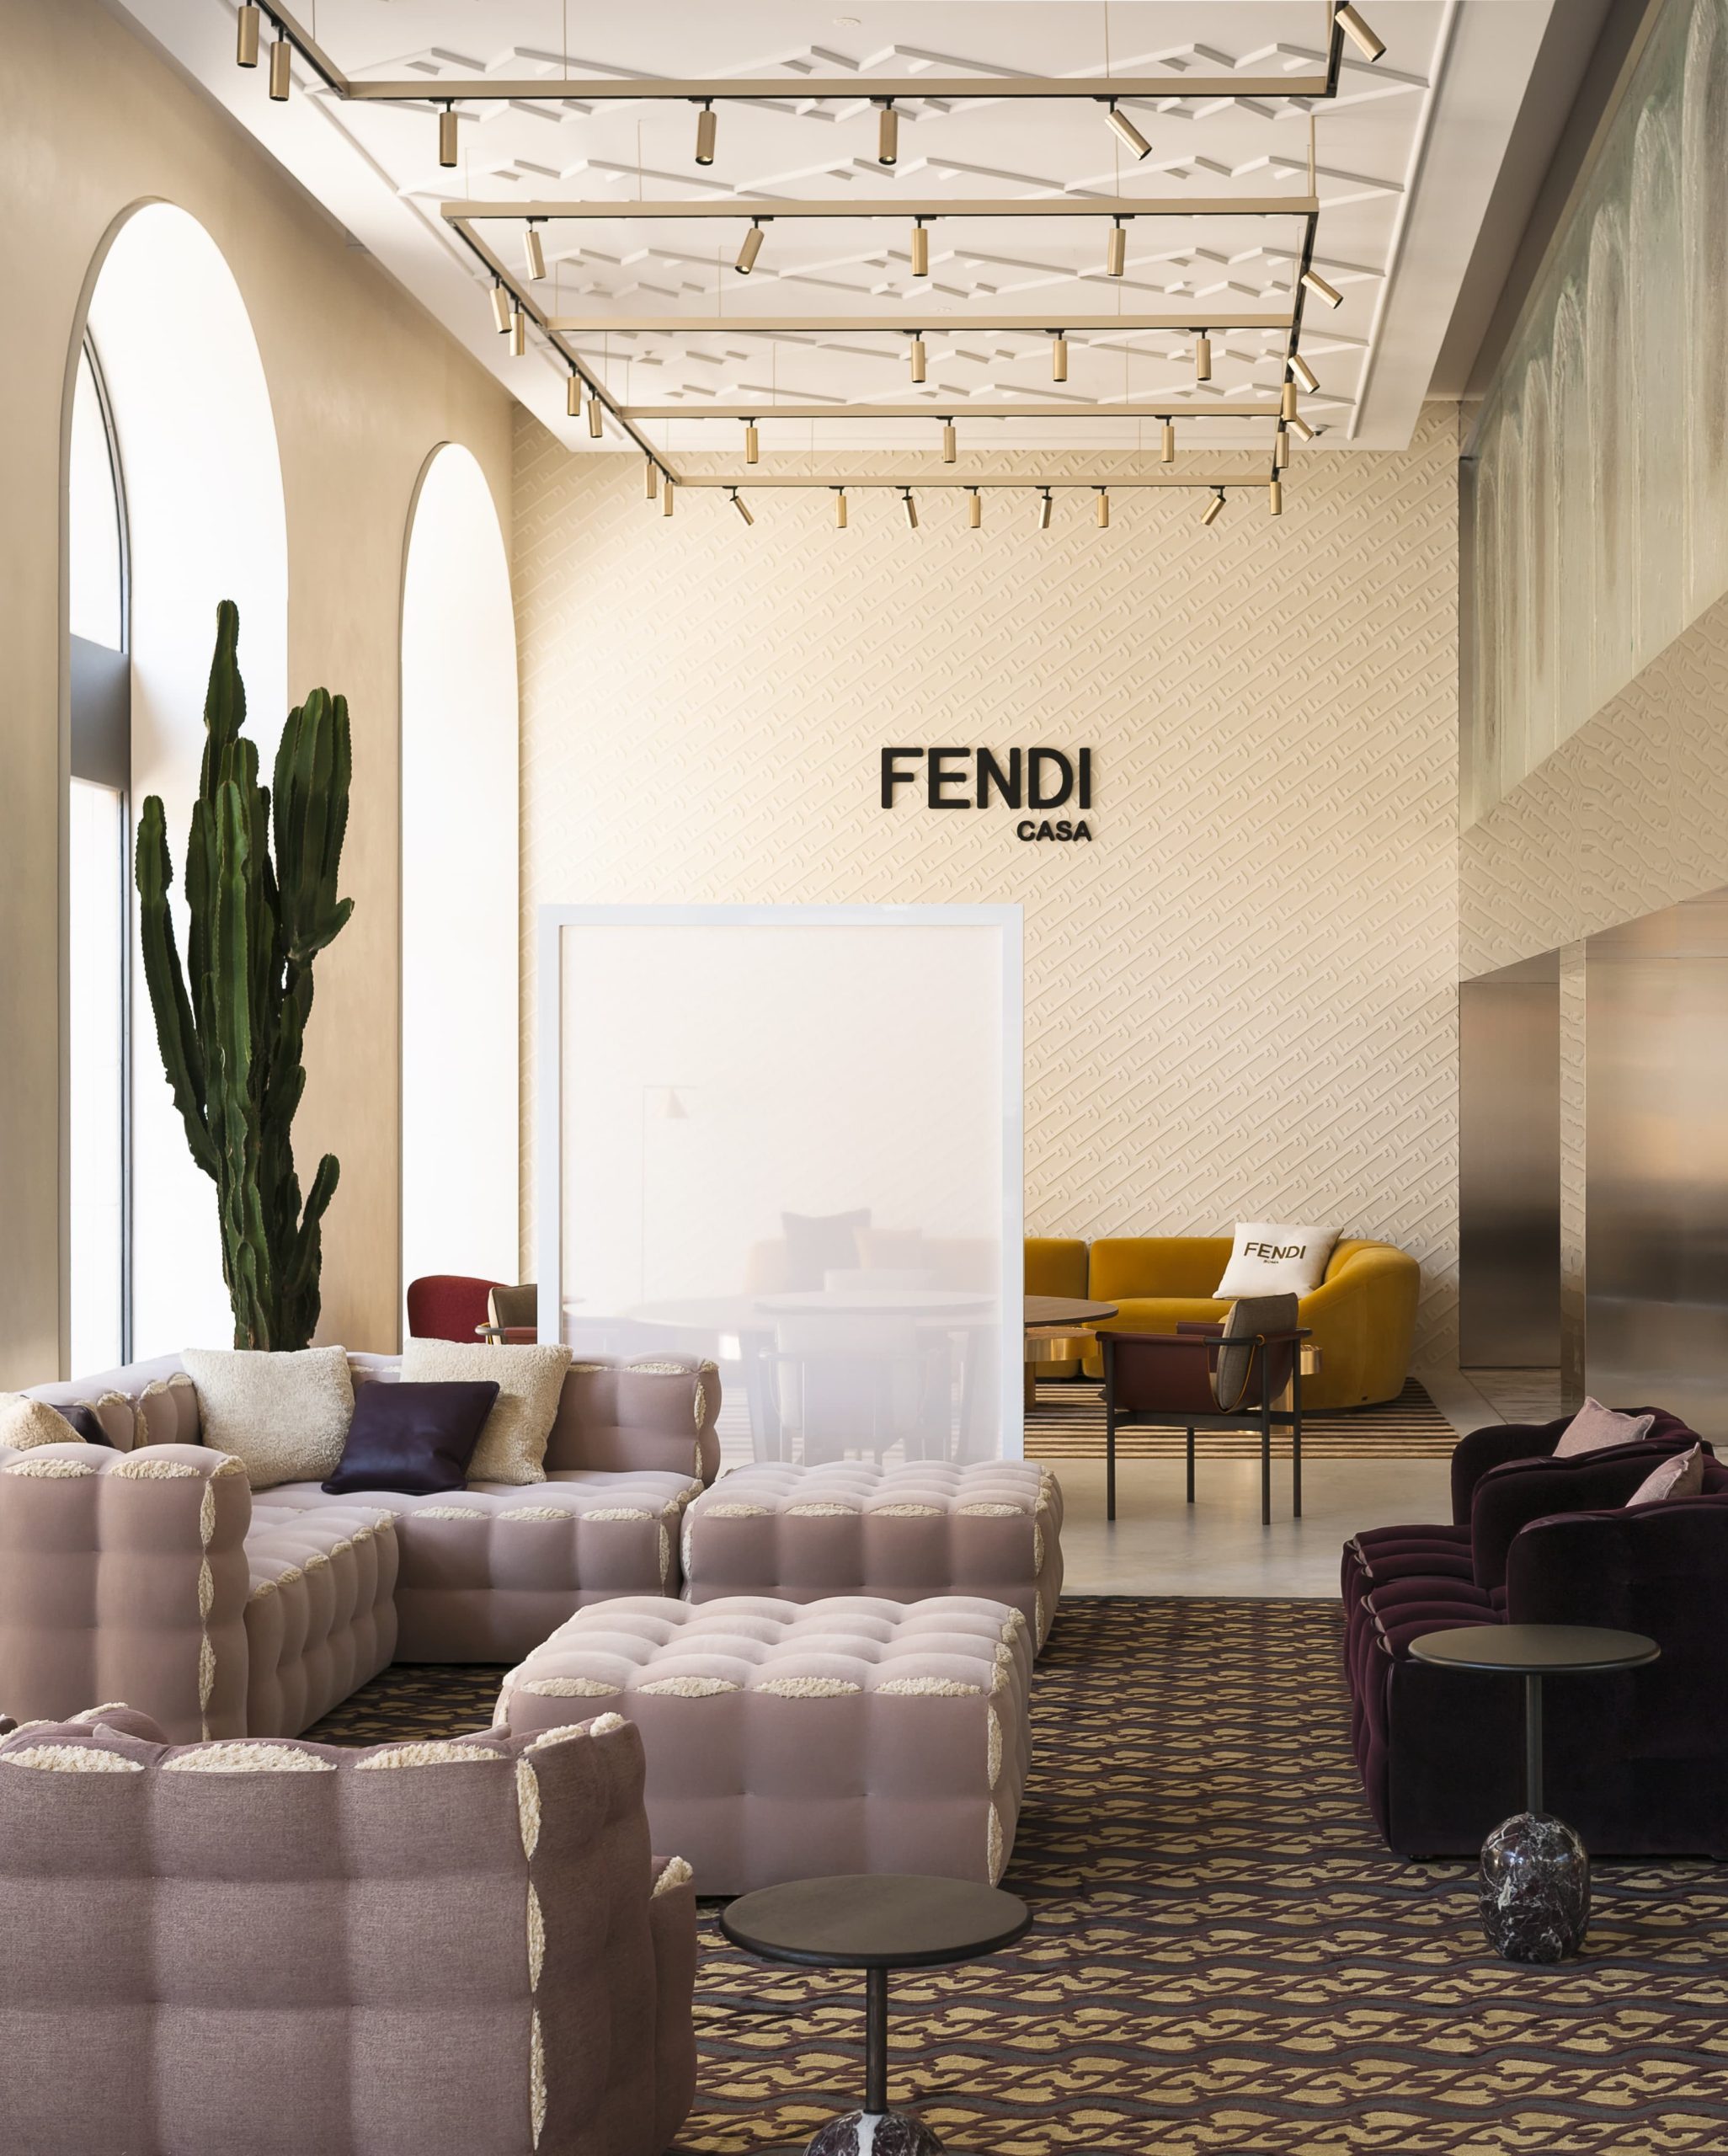 FENDI Casa Flagship Store Opening 22